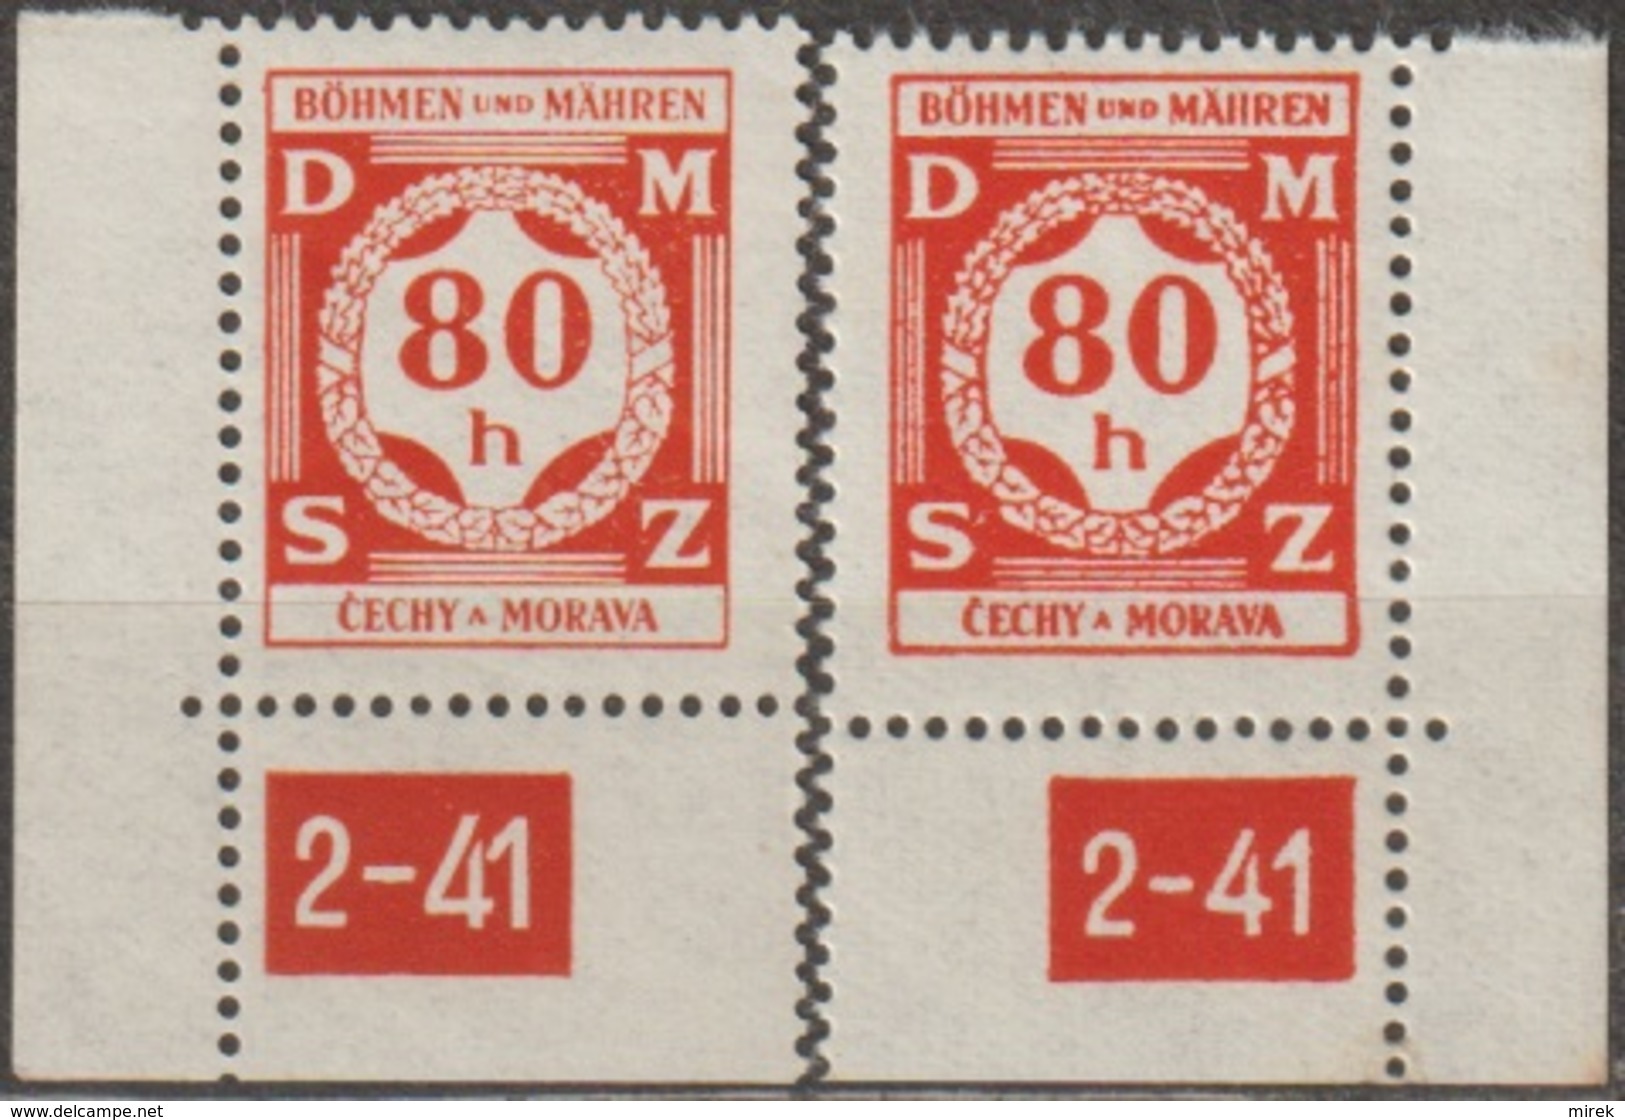 35/ Bohemia & Moravia; Service - ** Nr. SL 5 - Corner Stamps, Plate Mark 2-41 - Nuevos